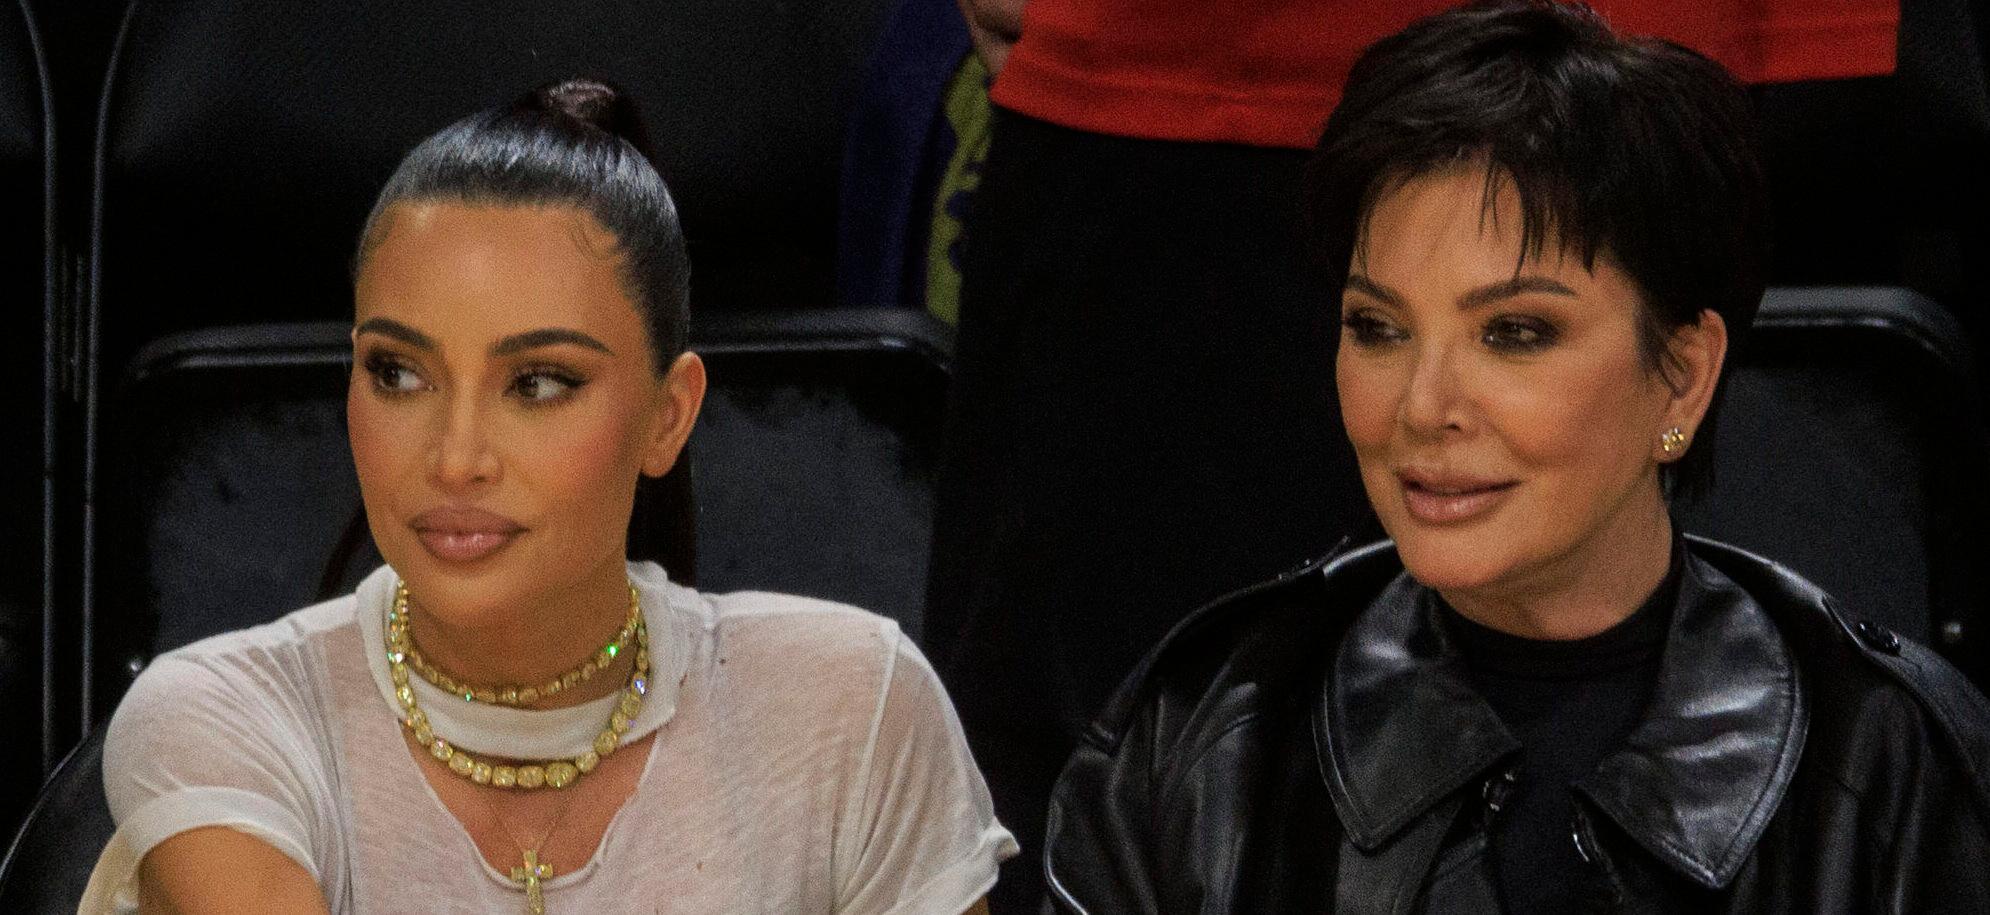 Km Kardashian and mom Kris Jenner at Lakers vs. Warriors Game 4